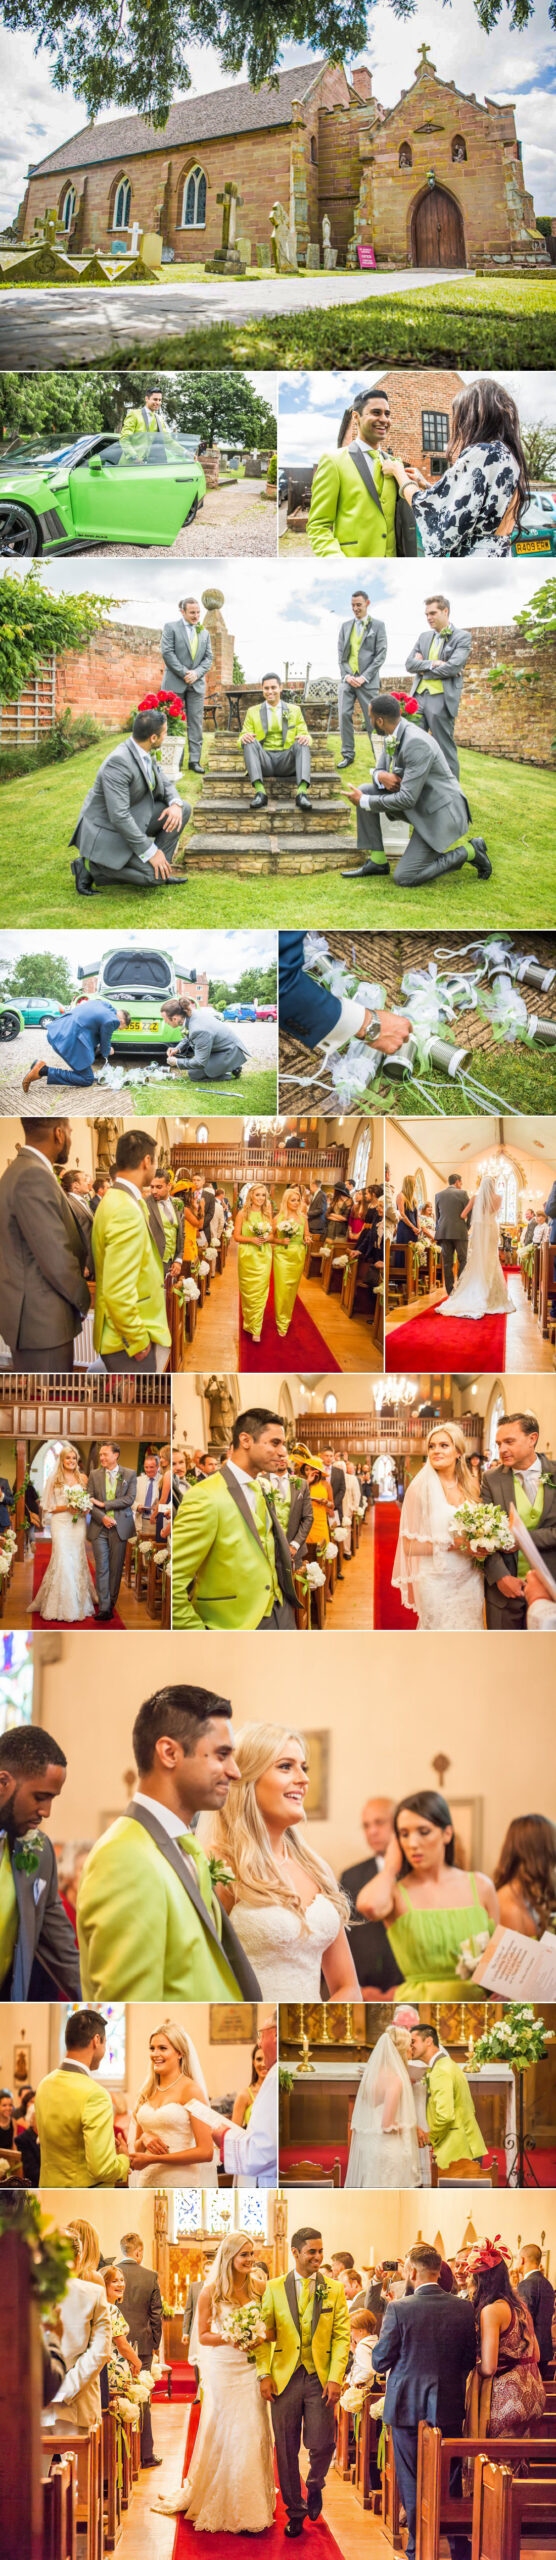 Harvington-Church-fusion-wedding